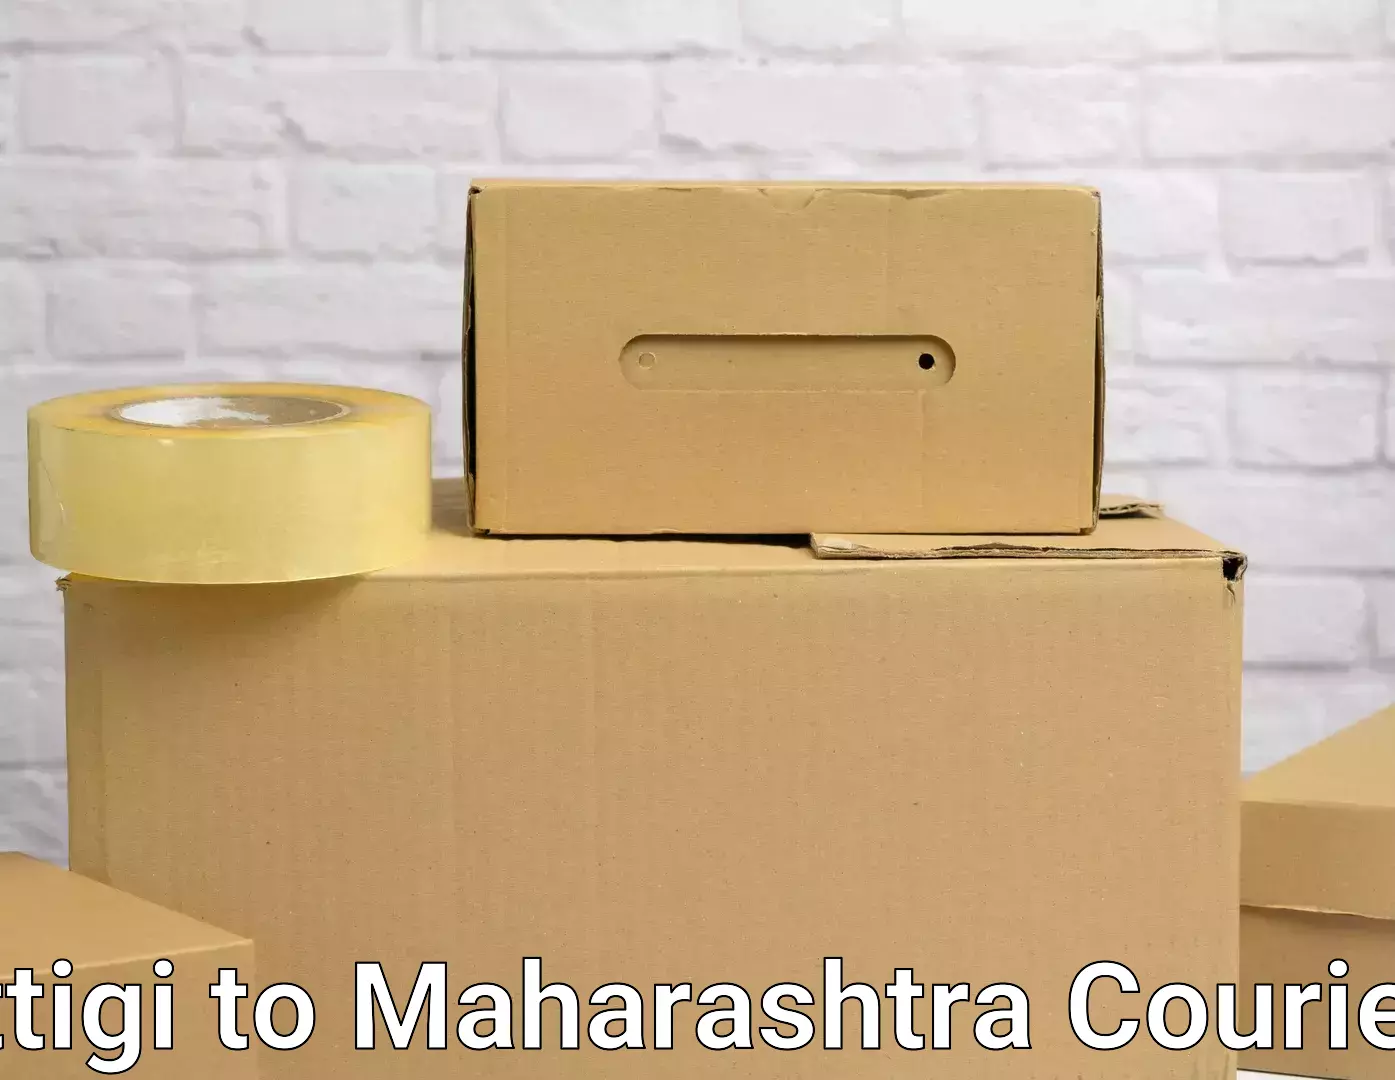 Trusted relocation experts Ittigi to Maharashtra